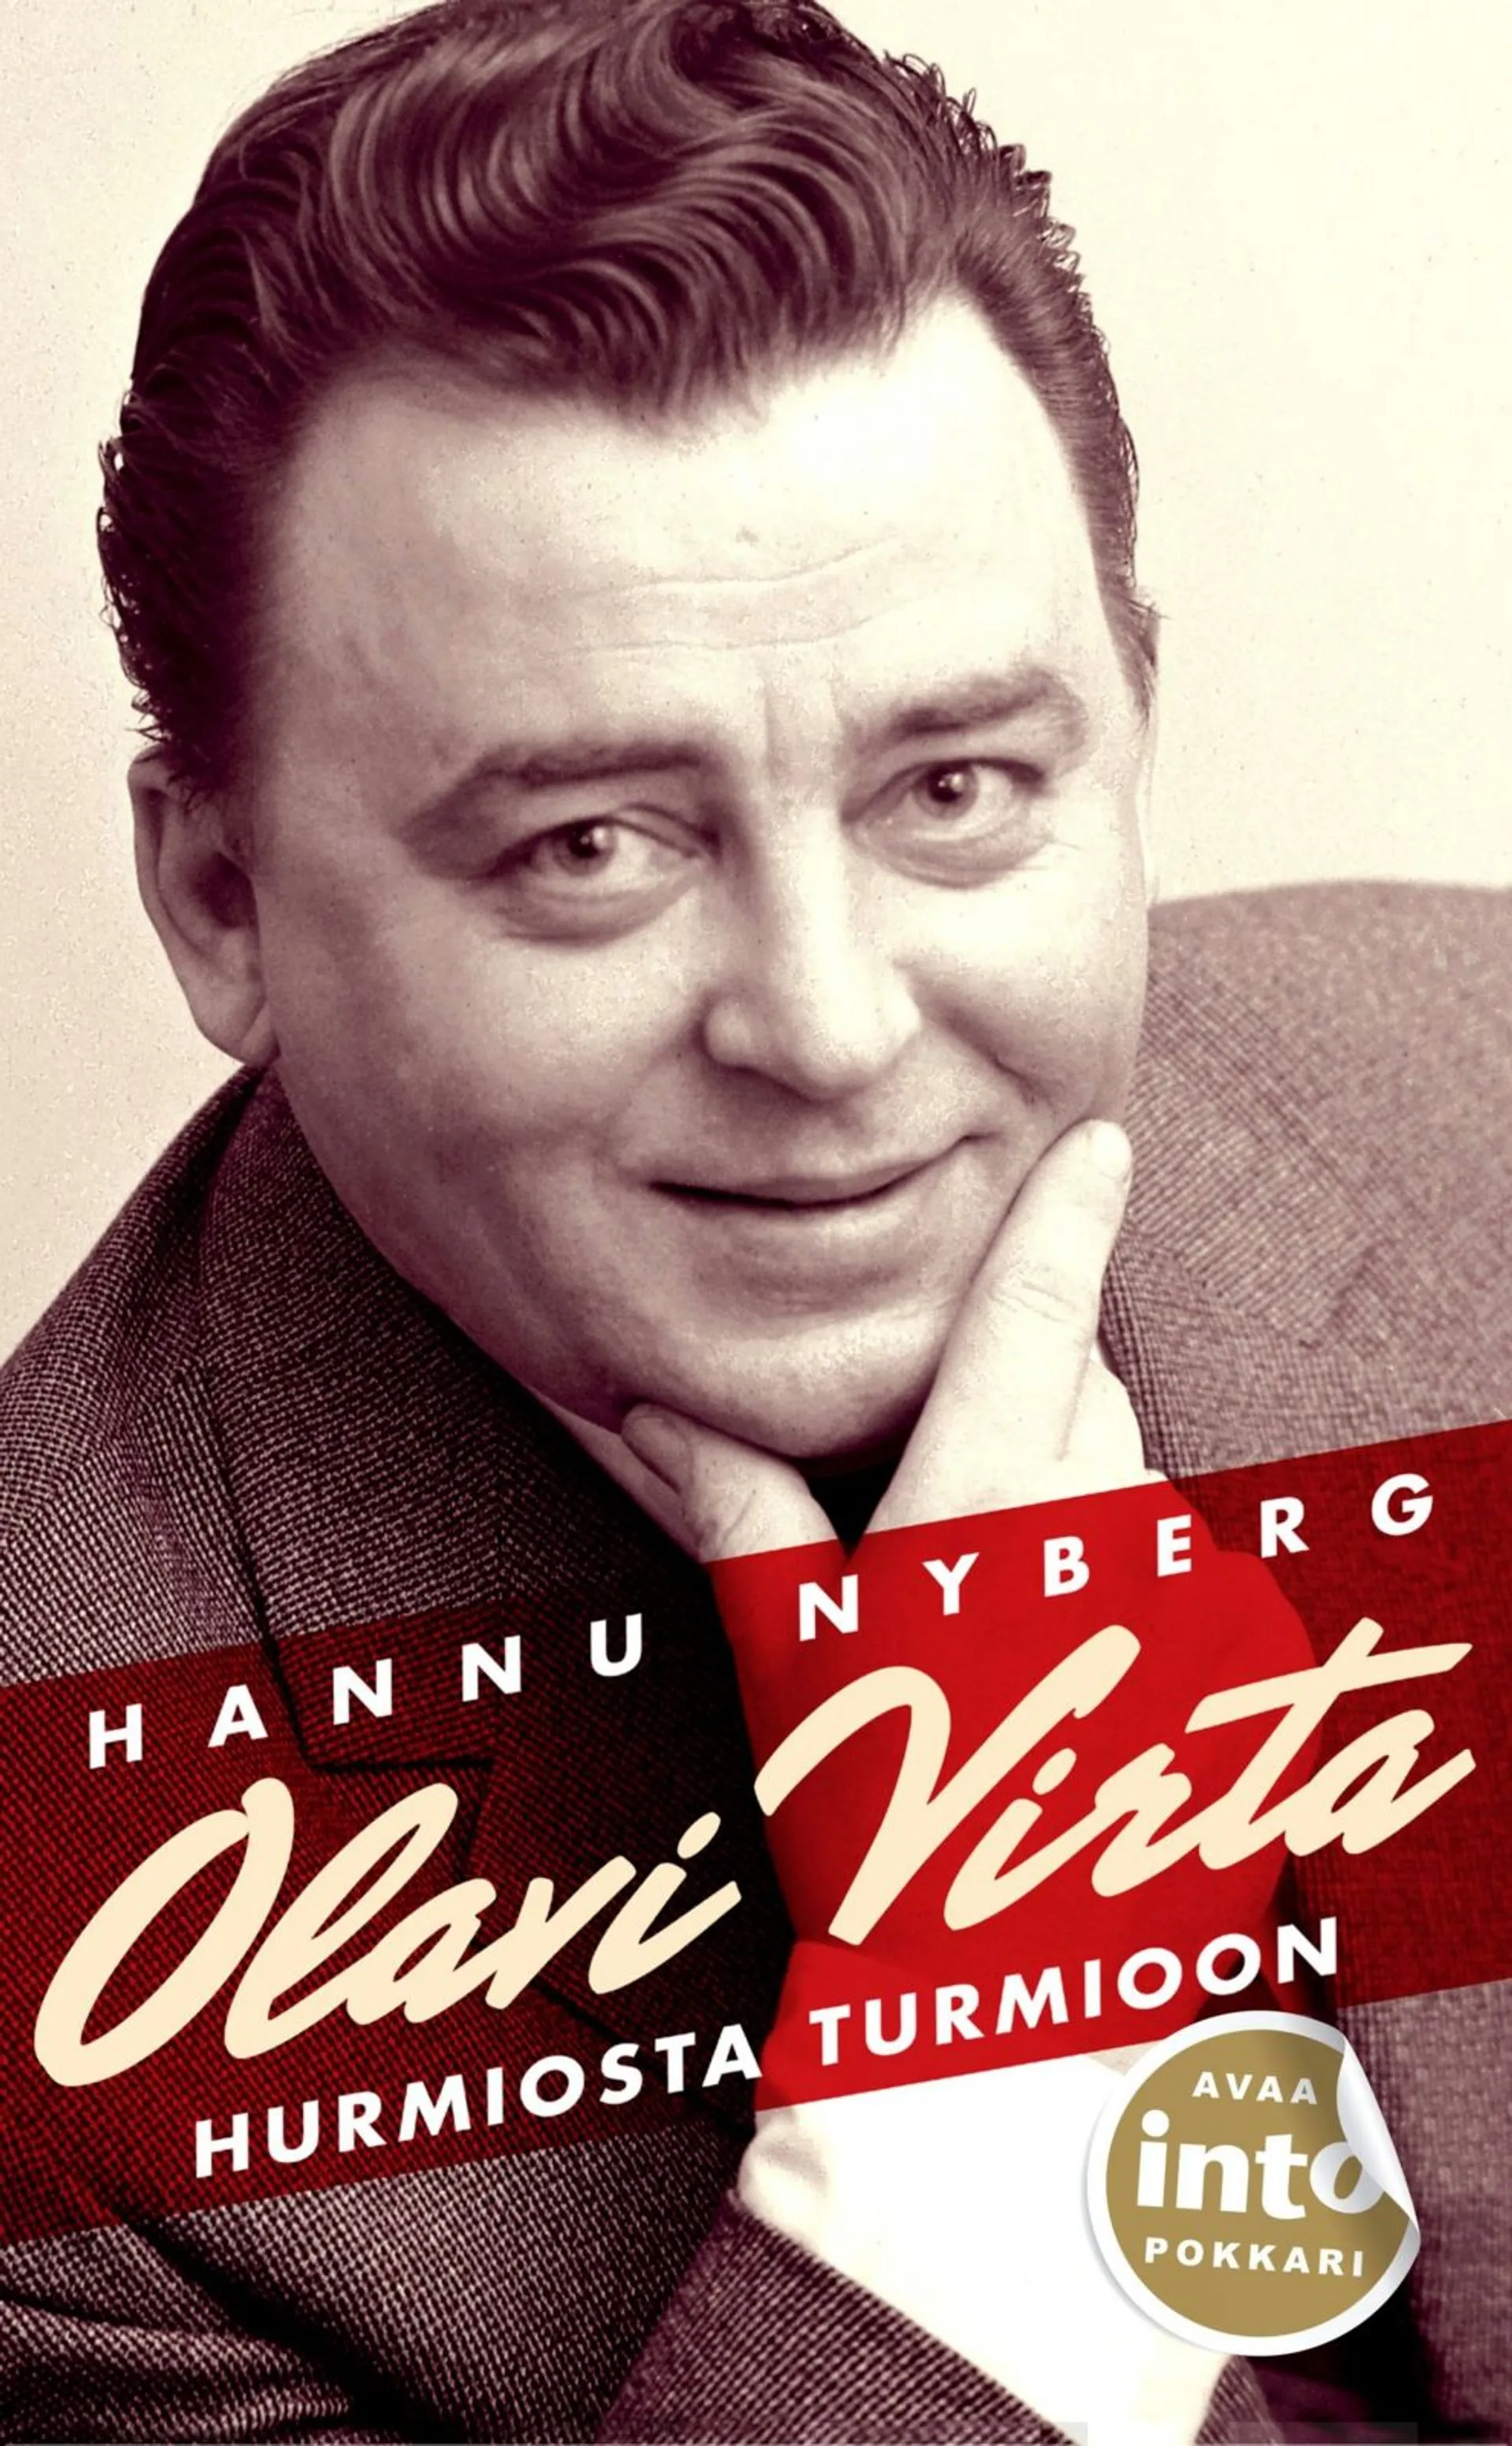 Nyberg, Olavi Virta